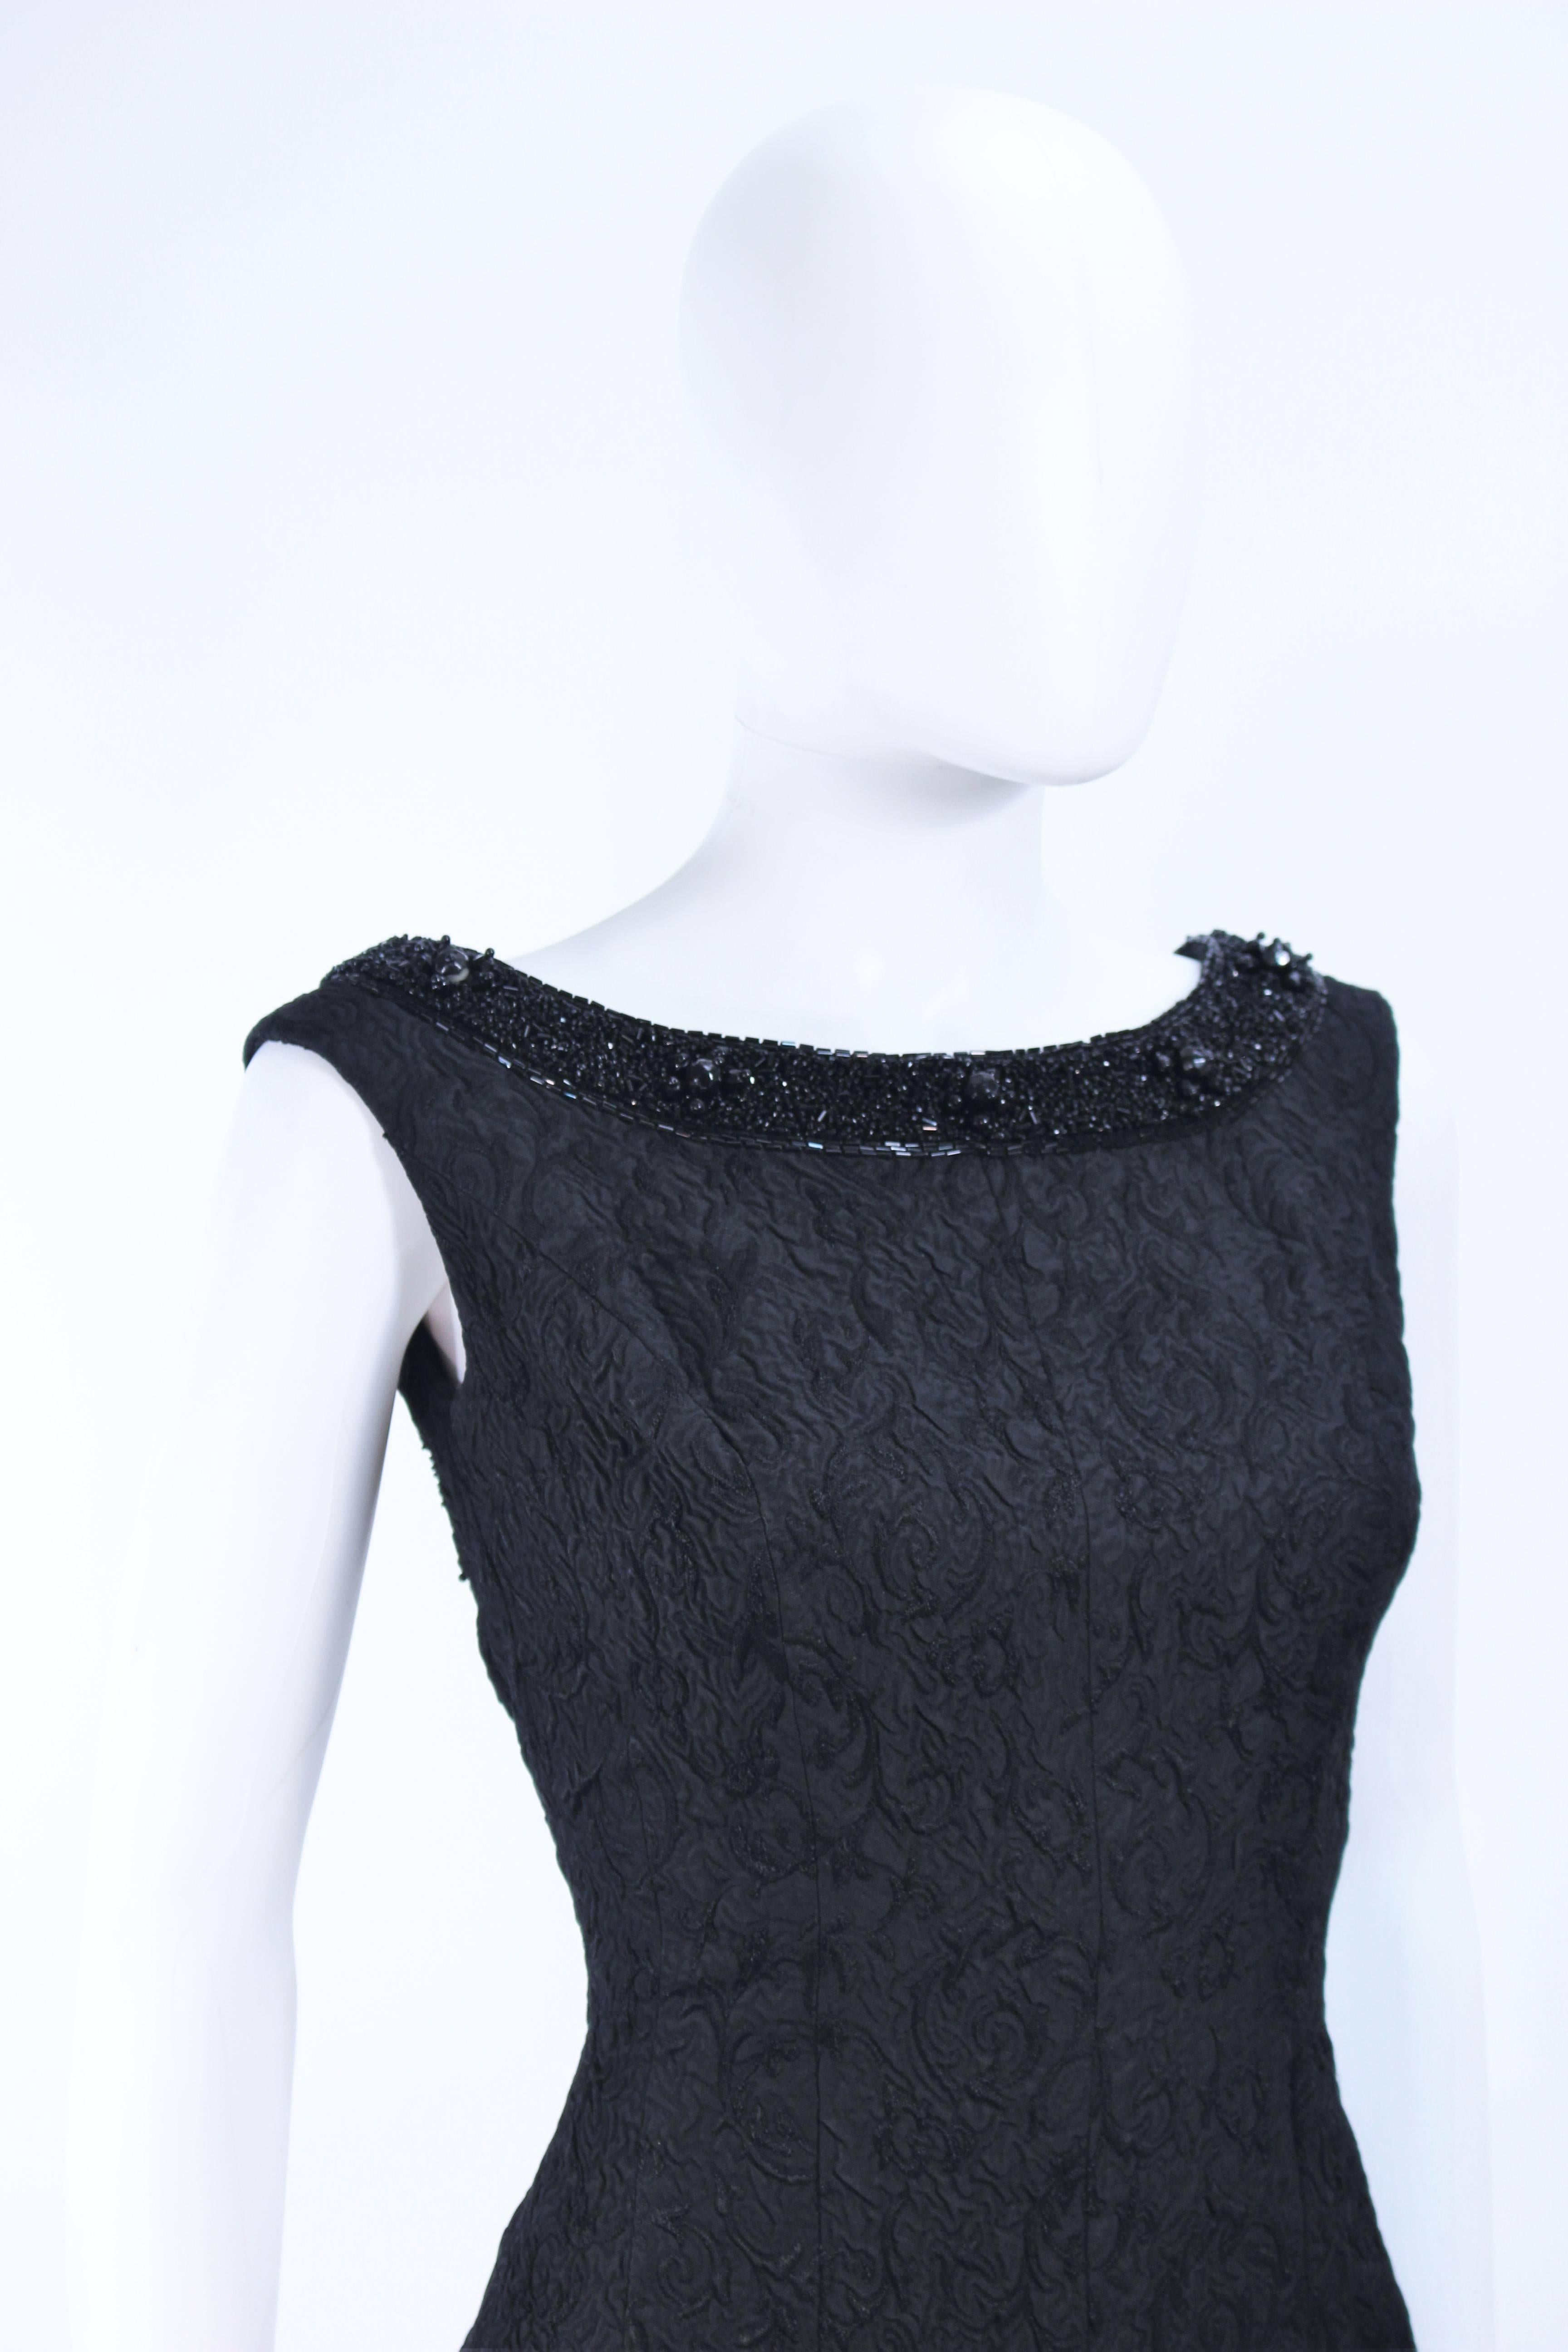 Vintage 1960's Black Brocade Cocktail Dress with Beaded Neckline Size 2 For Sale 1